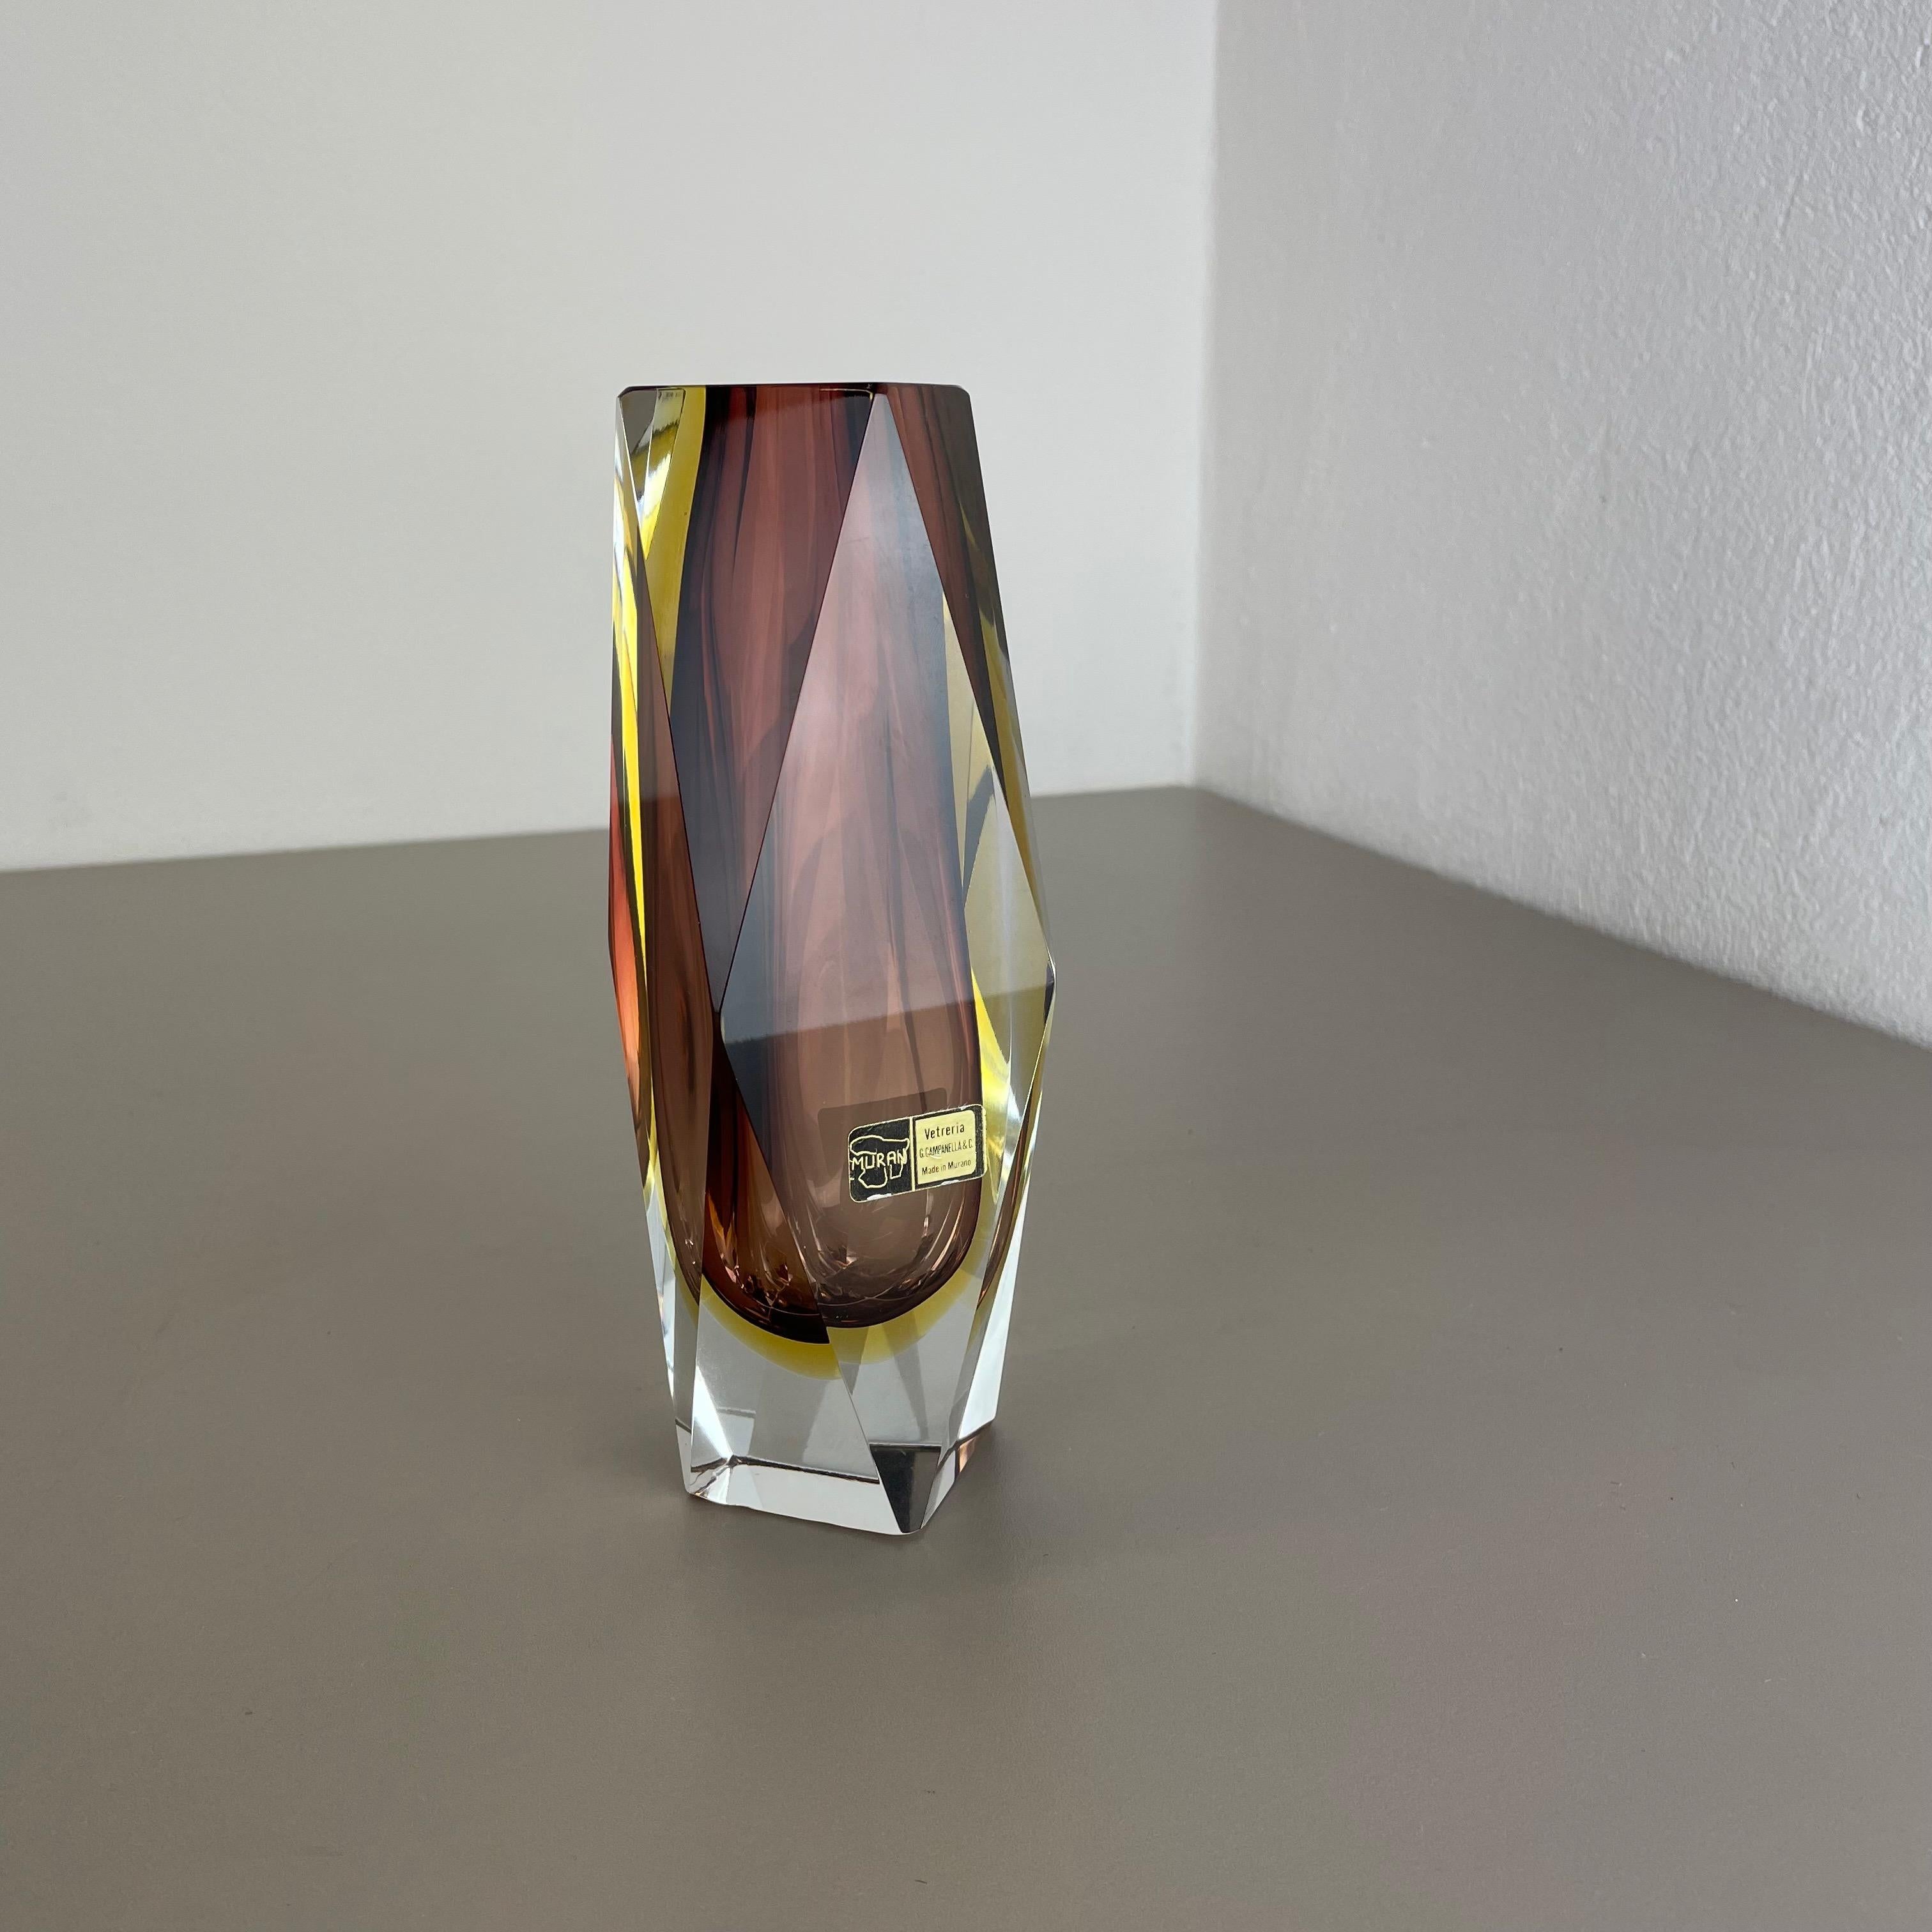 Article :

Vase en verre de Murano


Origine :

Murano, Italie


Décennie :

1970s


Design :

Alessandro Mandruzzato


Producteur :

Vetreria G. Campanella & C.


Ce vase en verre original a été conçu par Alessandro Mandruzzato et produit par